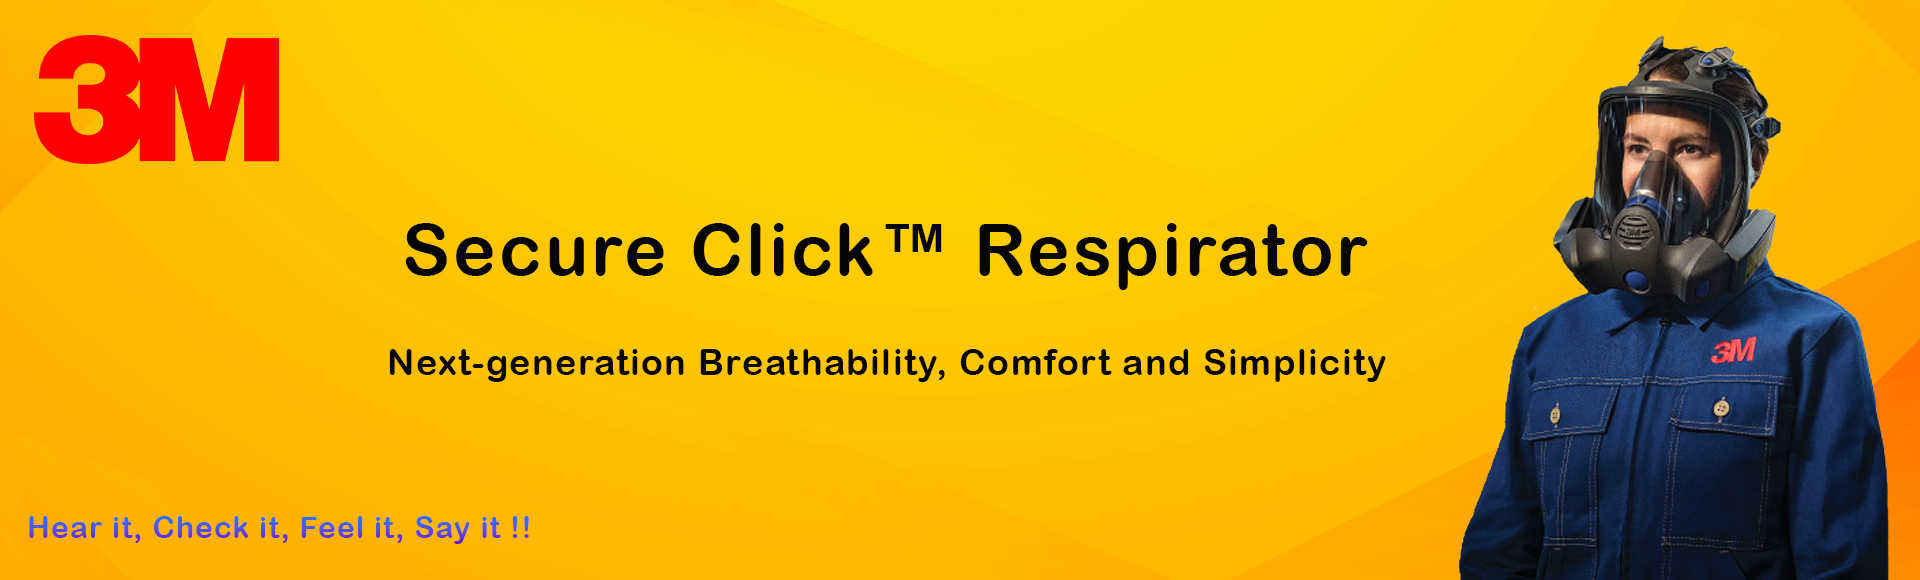 3M Secure Click Respirator